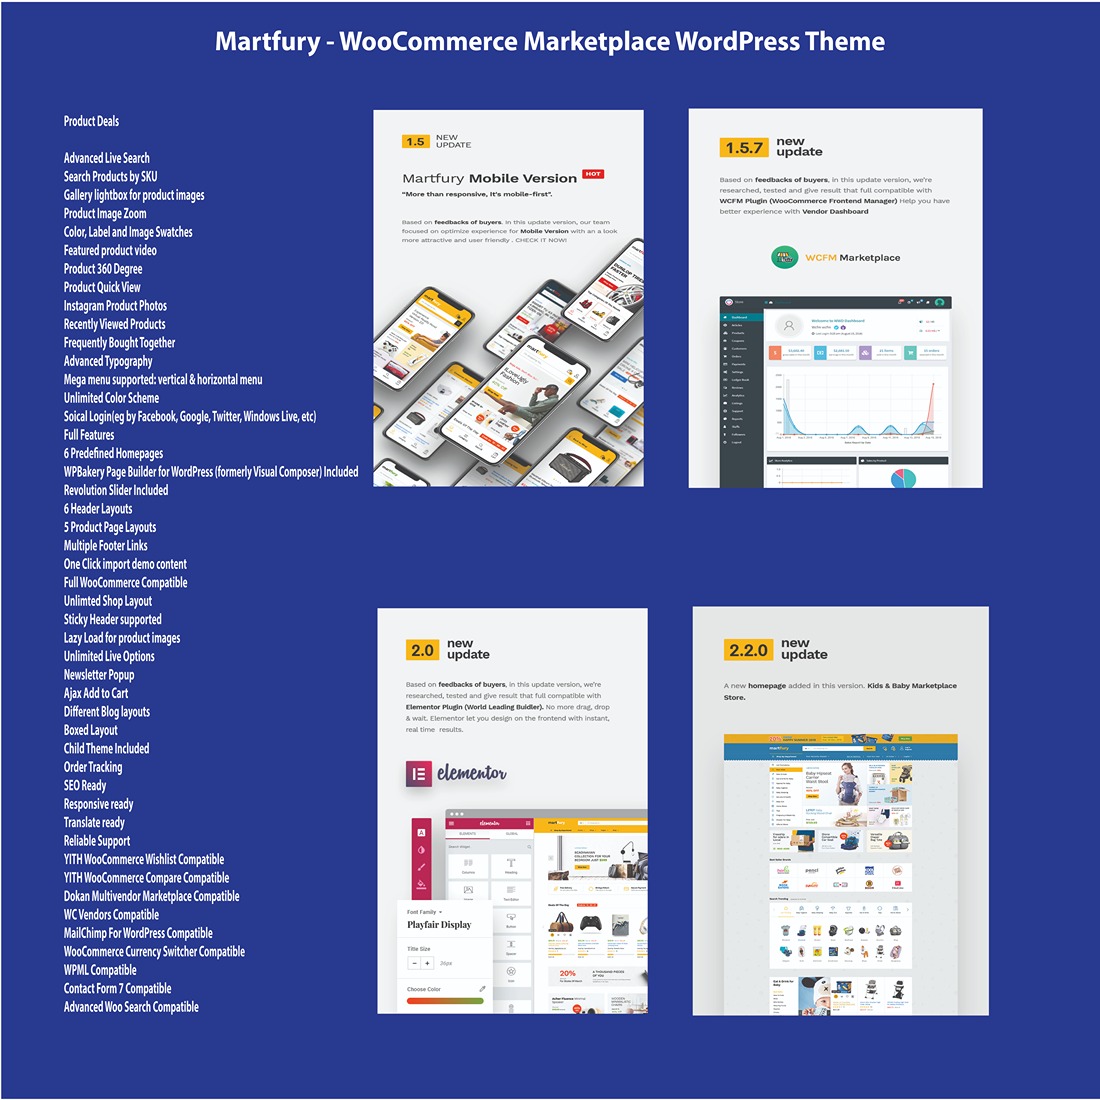 Martfury - Woo Commerce Marketplace WordPress Theme preview image.